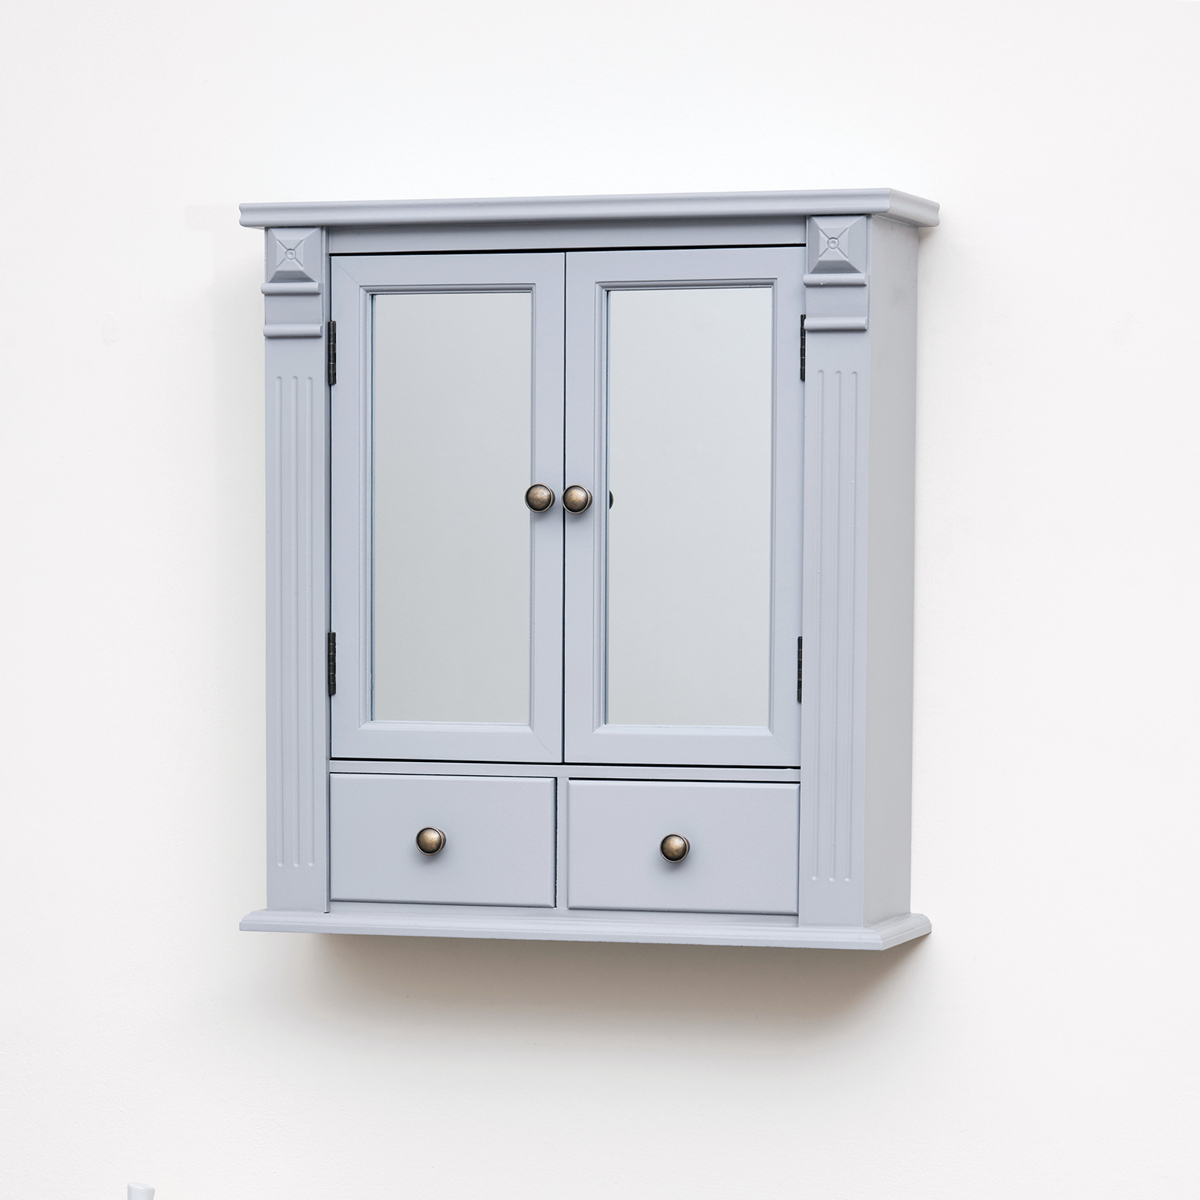 Grey Mirrored Bathroom Cabinet With Drawer Storage - Retro Bathroom Wall Cabinets Uk